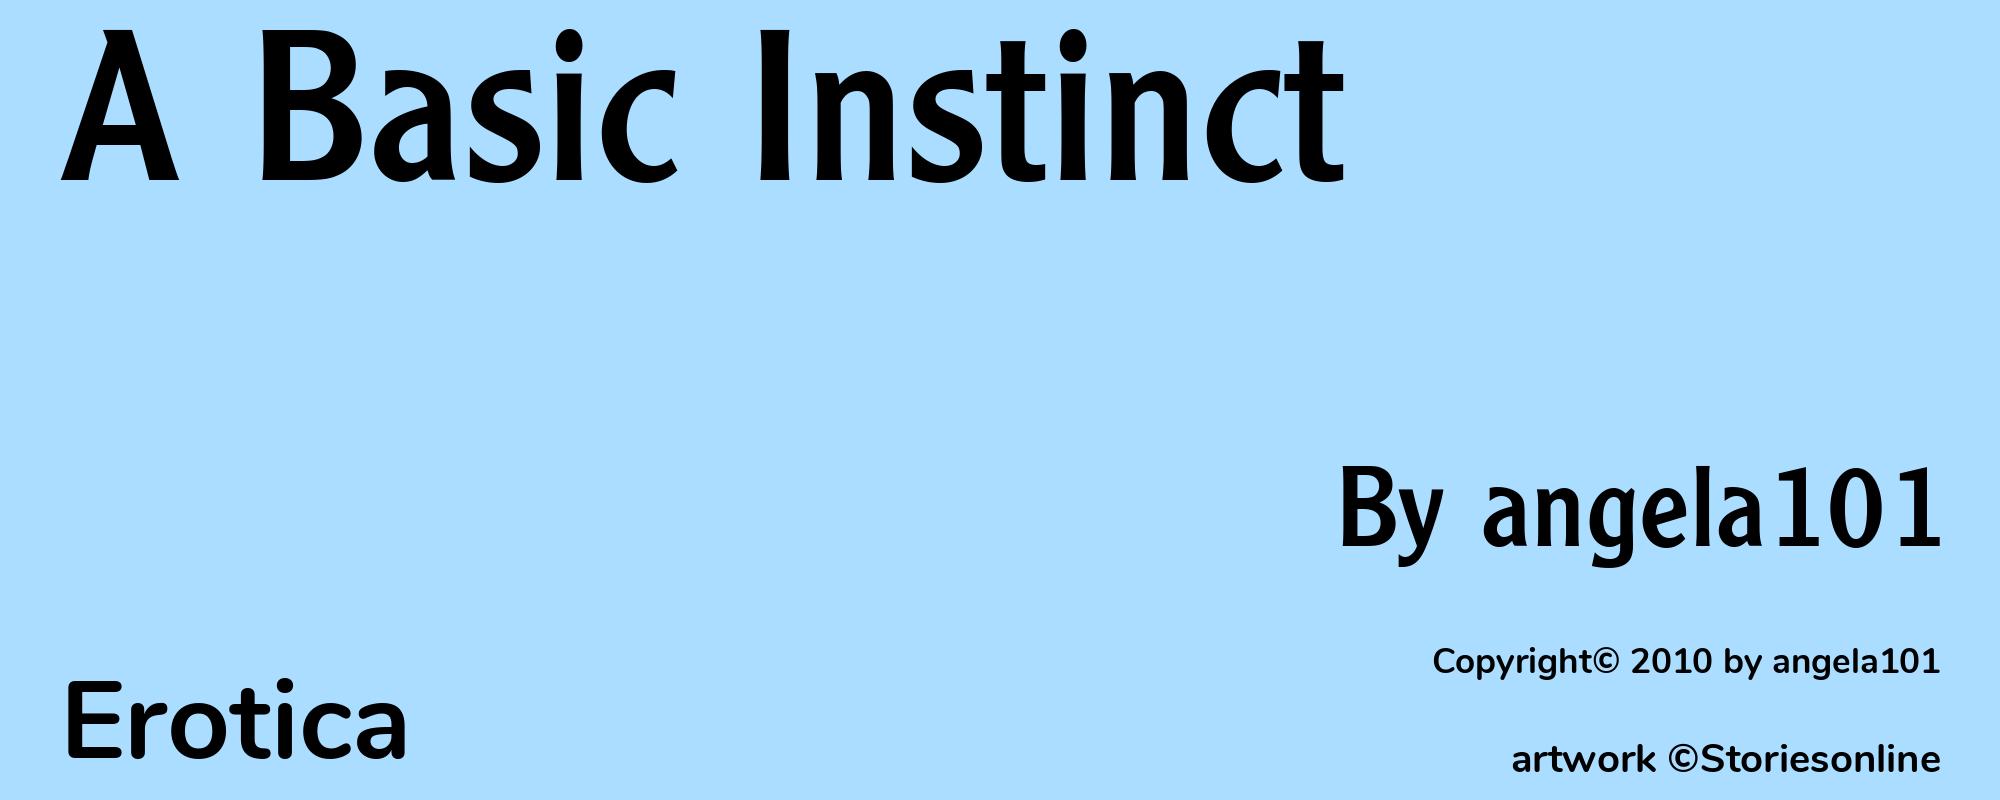 A Basic Instinct - Cover